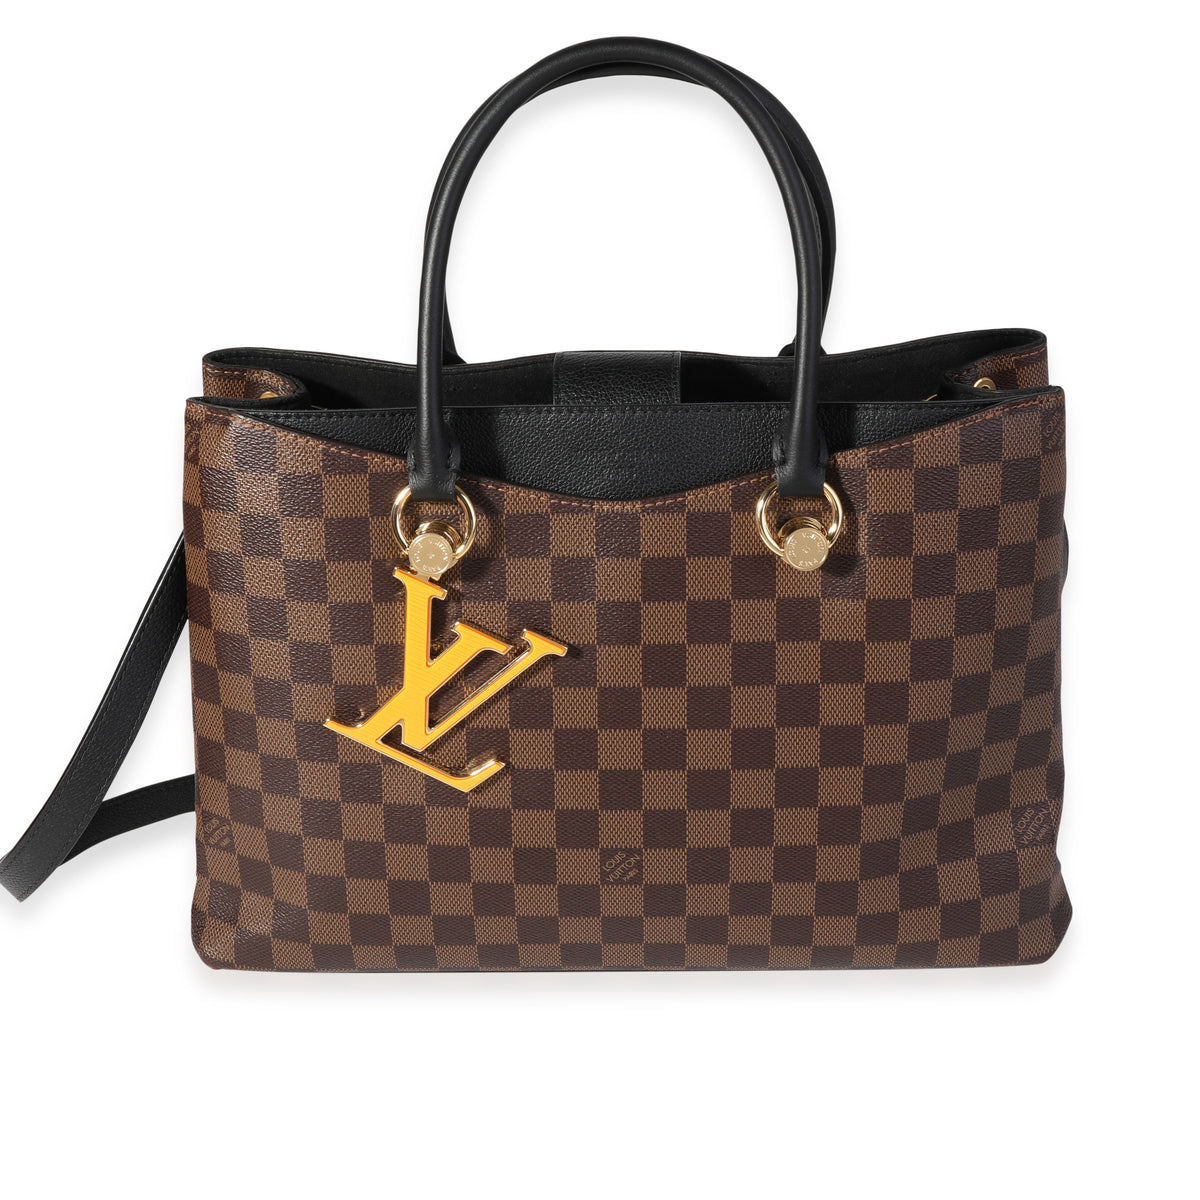 LV Rep. $250  Bags, Cheap louis vuitton handbags, Leather bag